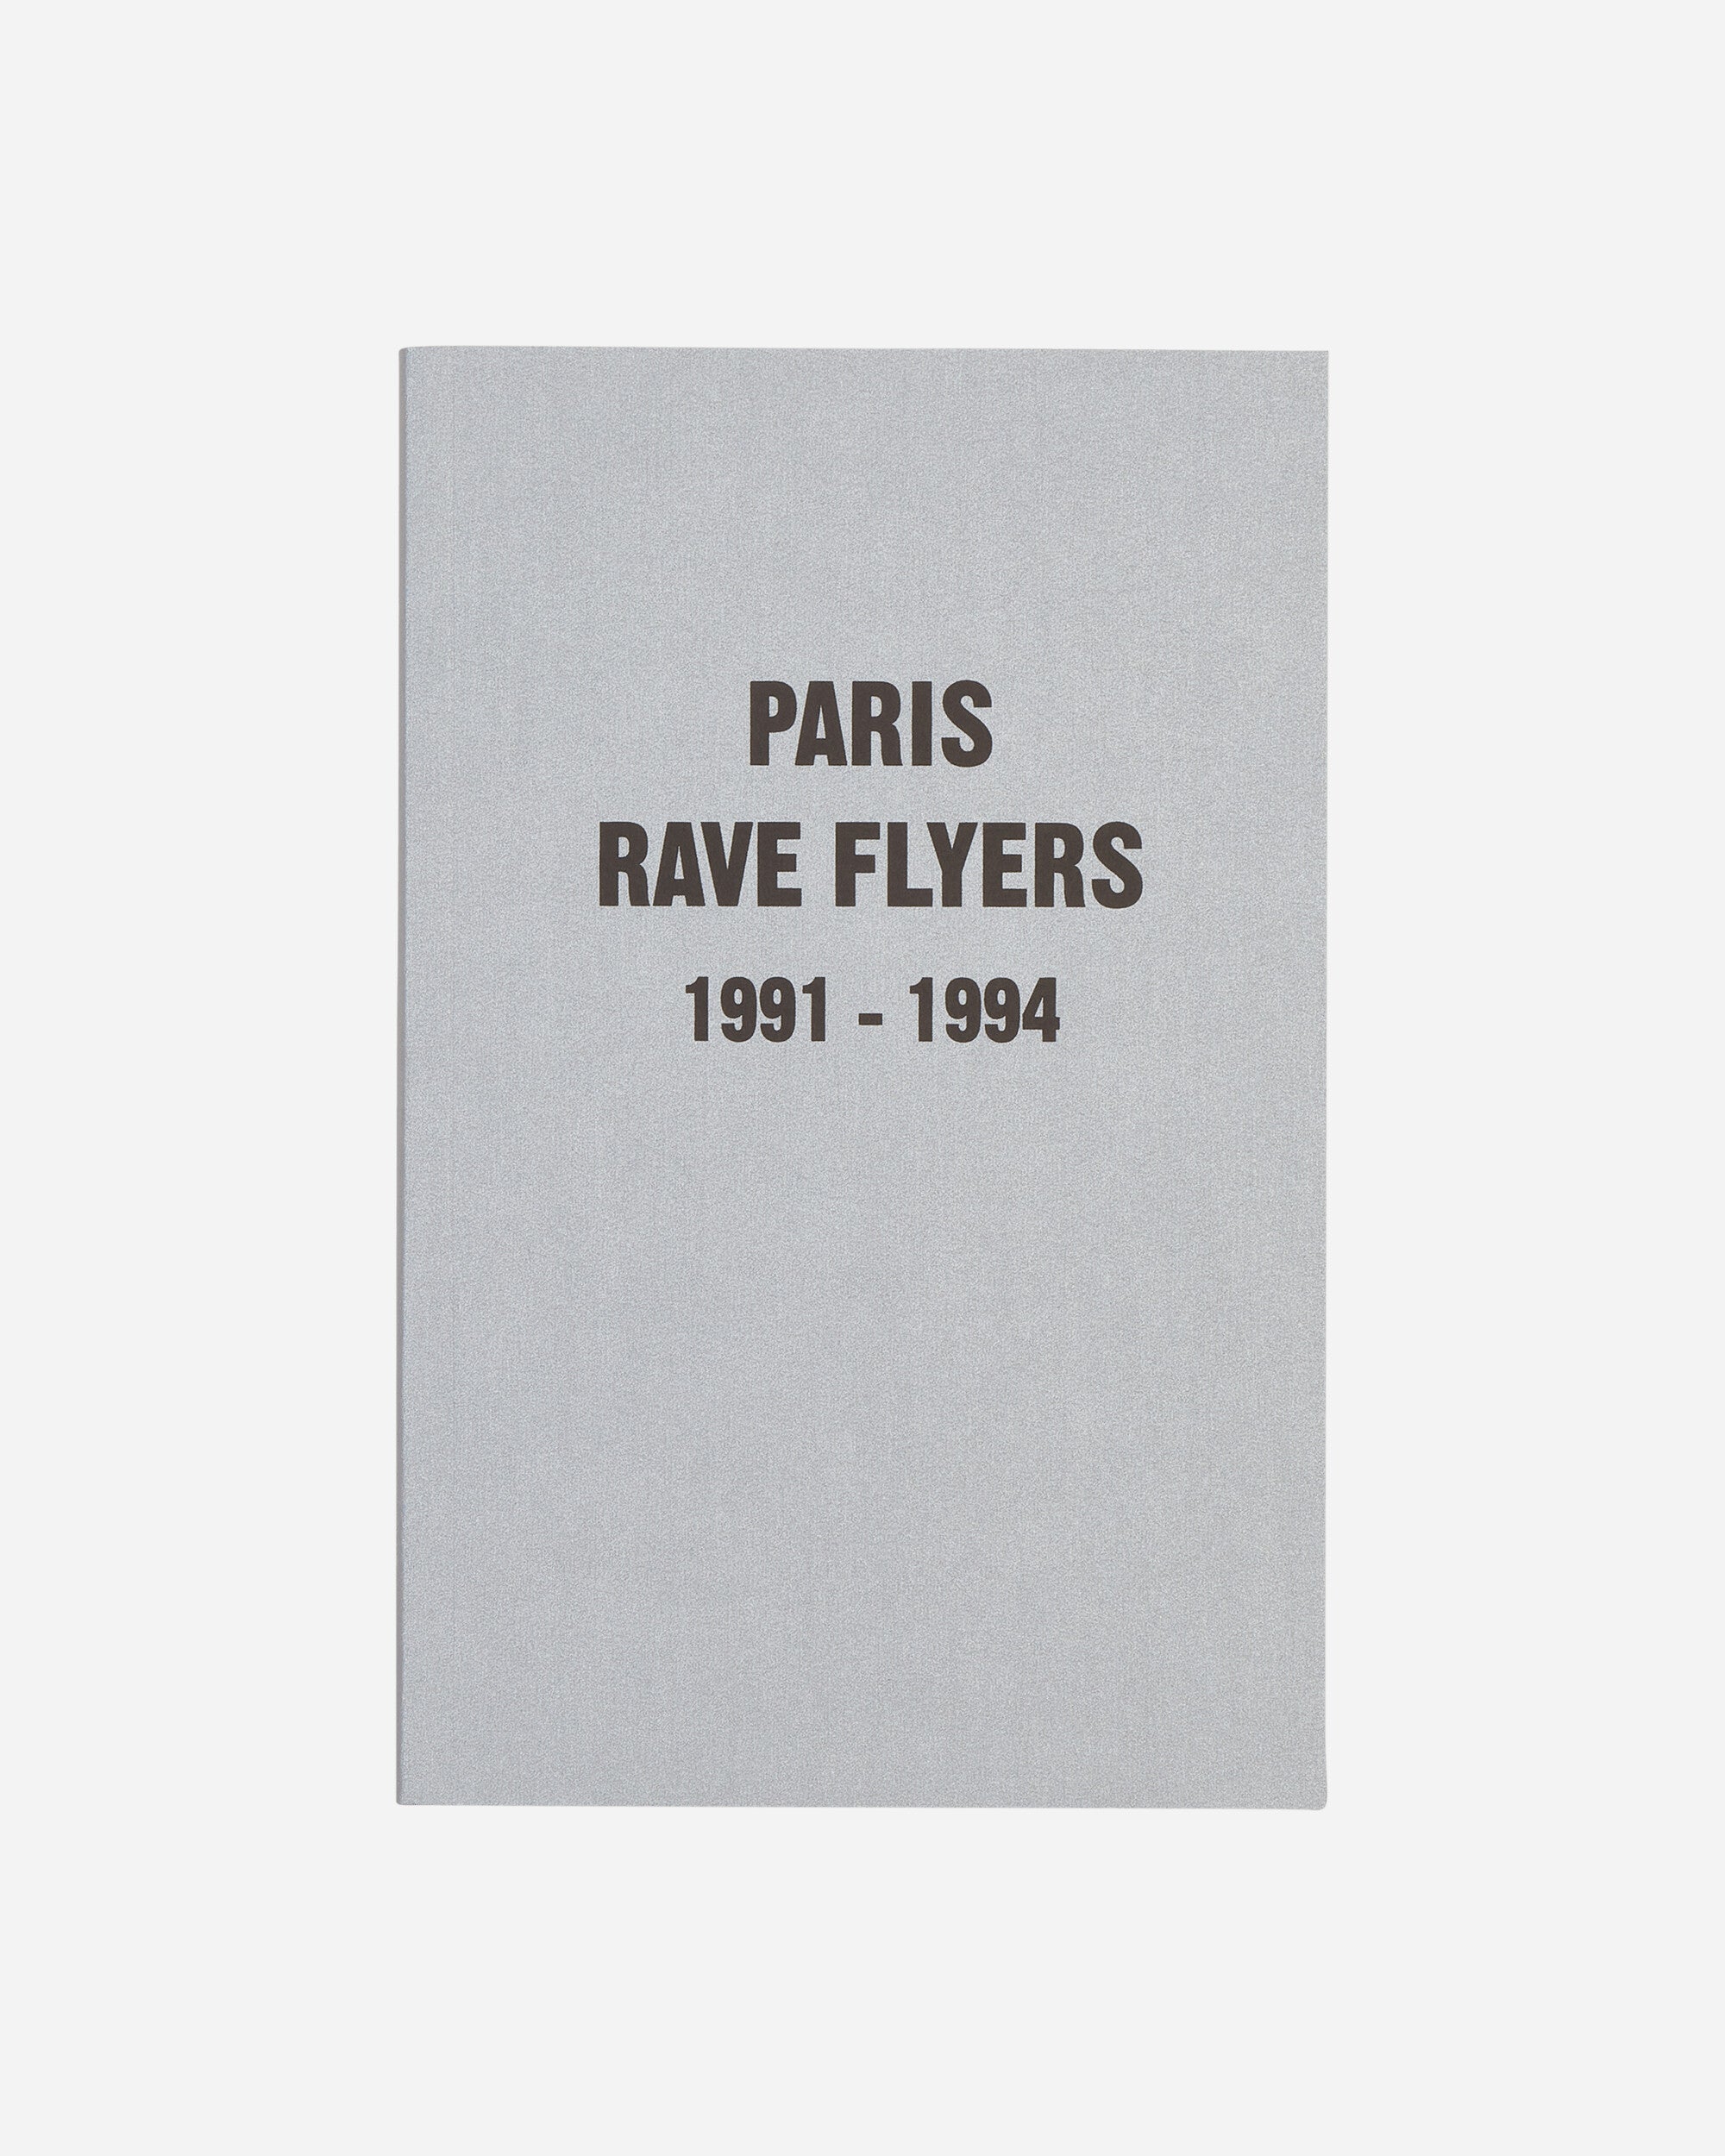 Sprint Magazines Paris Rave Flyers 1991-1994 Multicolor Books and Magazines Books SMPARISRAVE 1